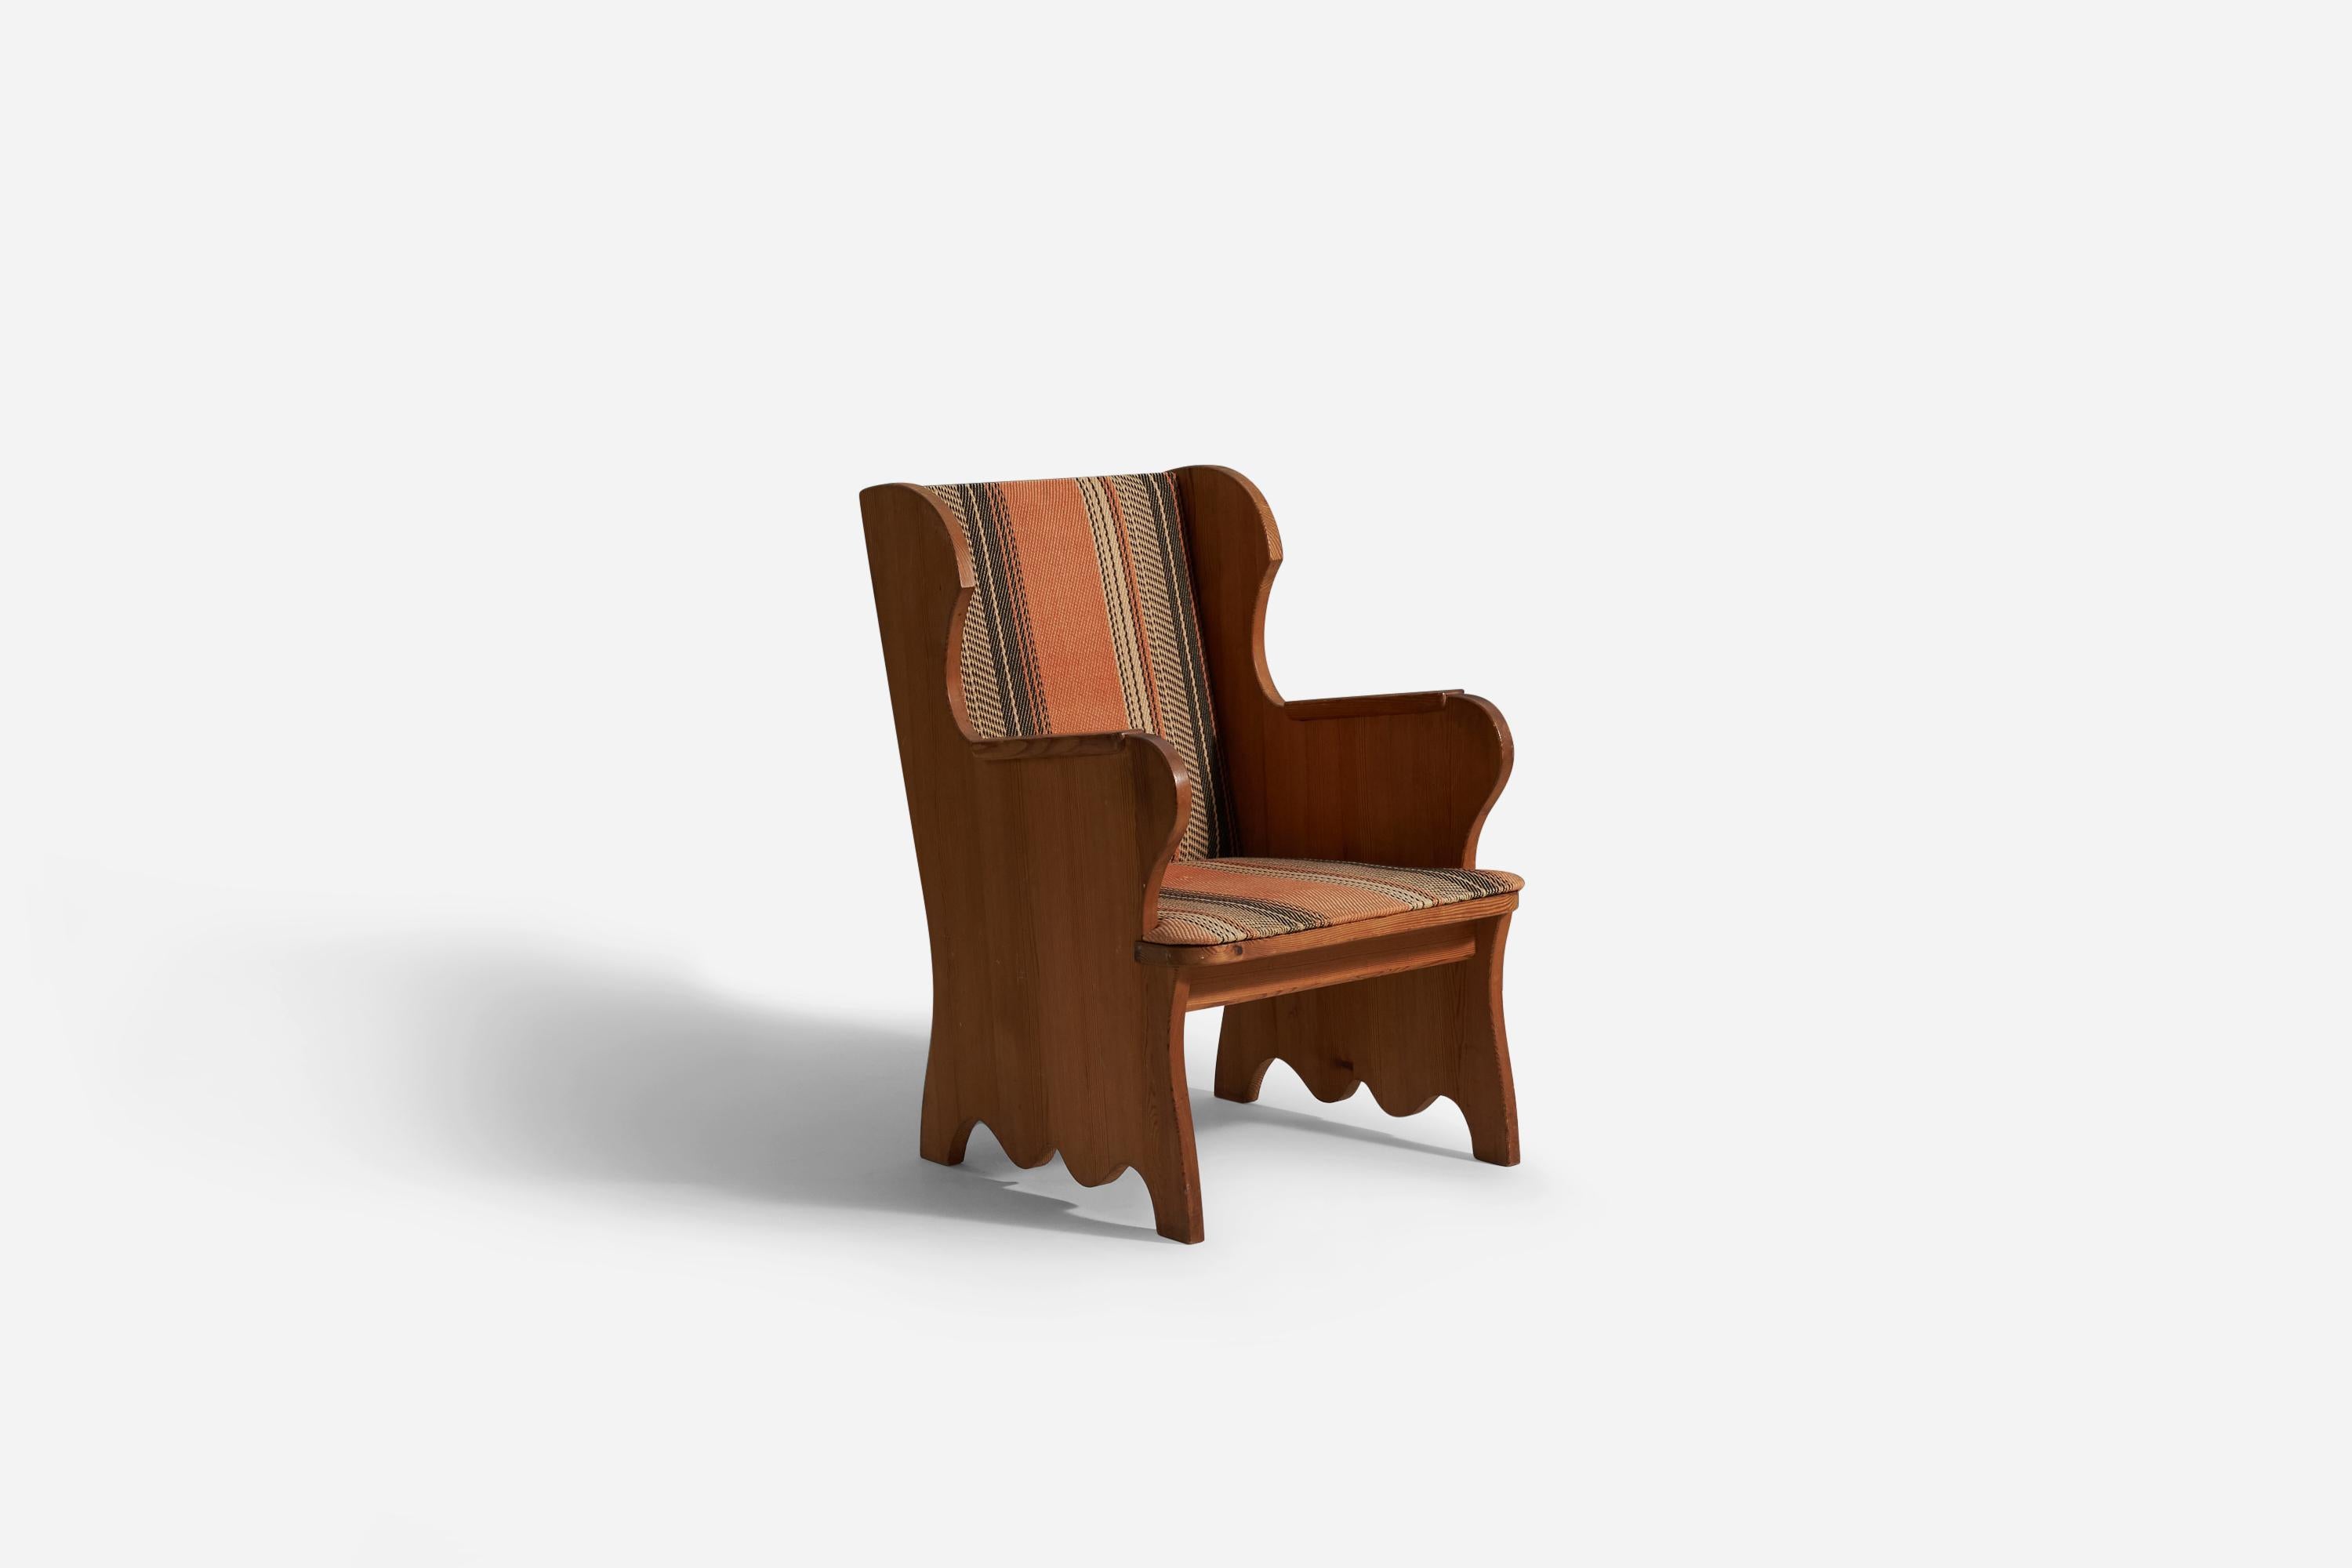 Sessel aus gebeiztem Kiefernholz und braunem Stoff, Modell 